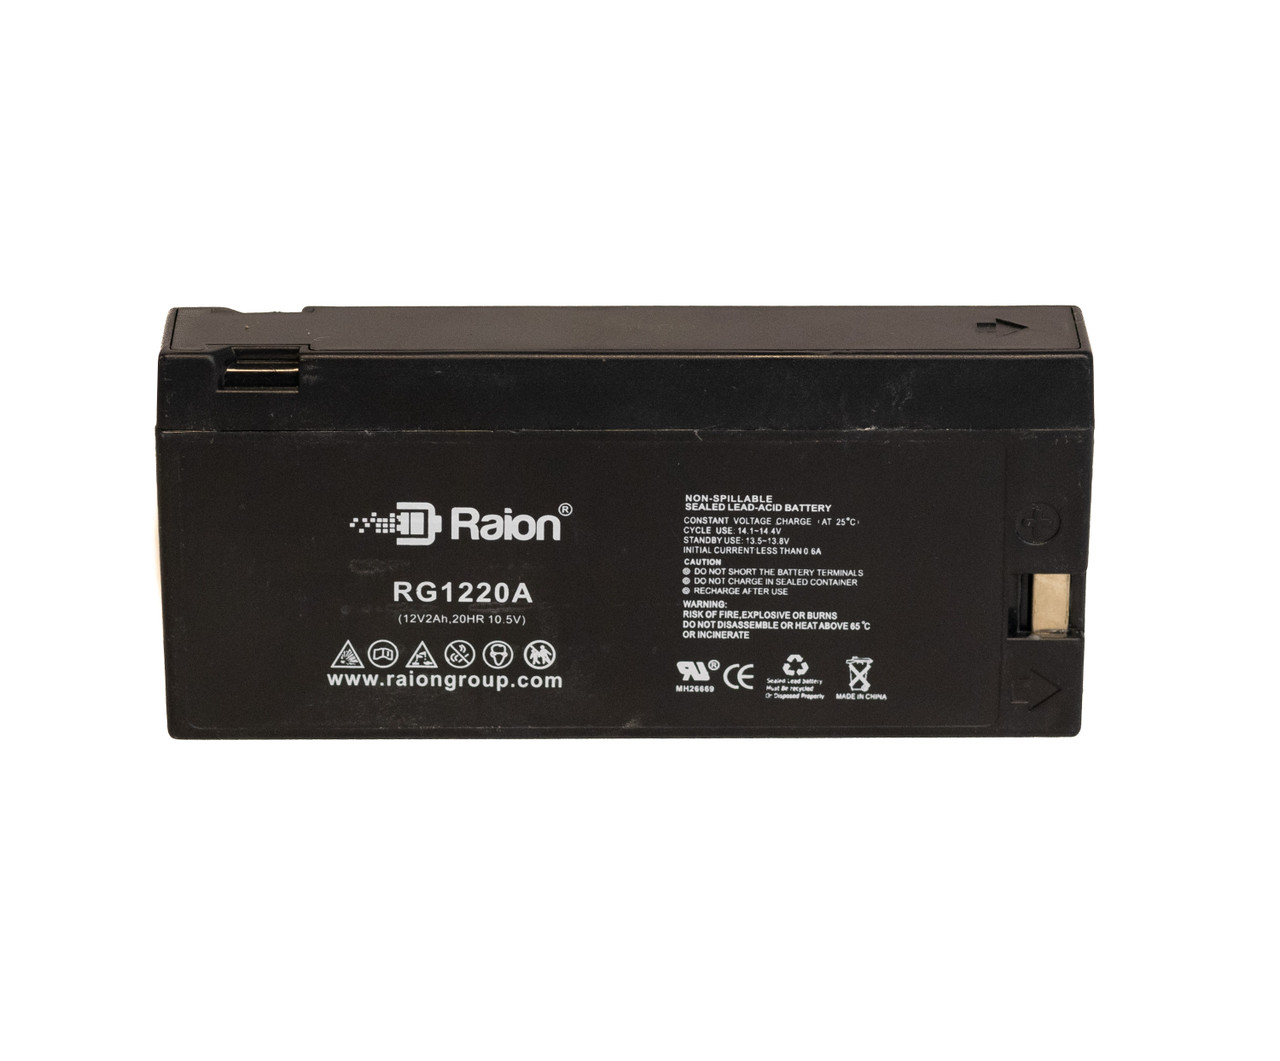 Raion Power RG1220A SLA Battery for Curtis Mathes GV-800